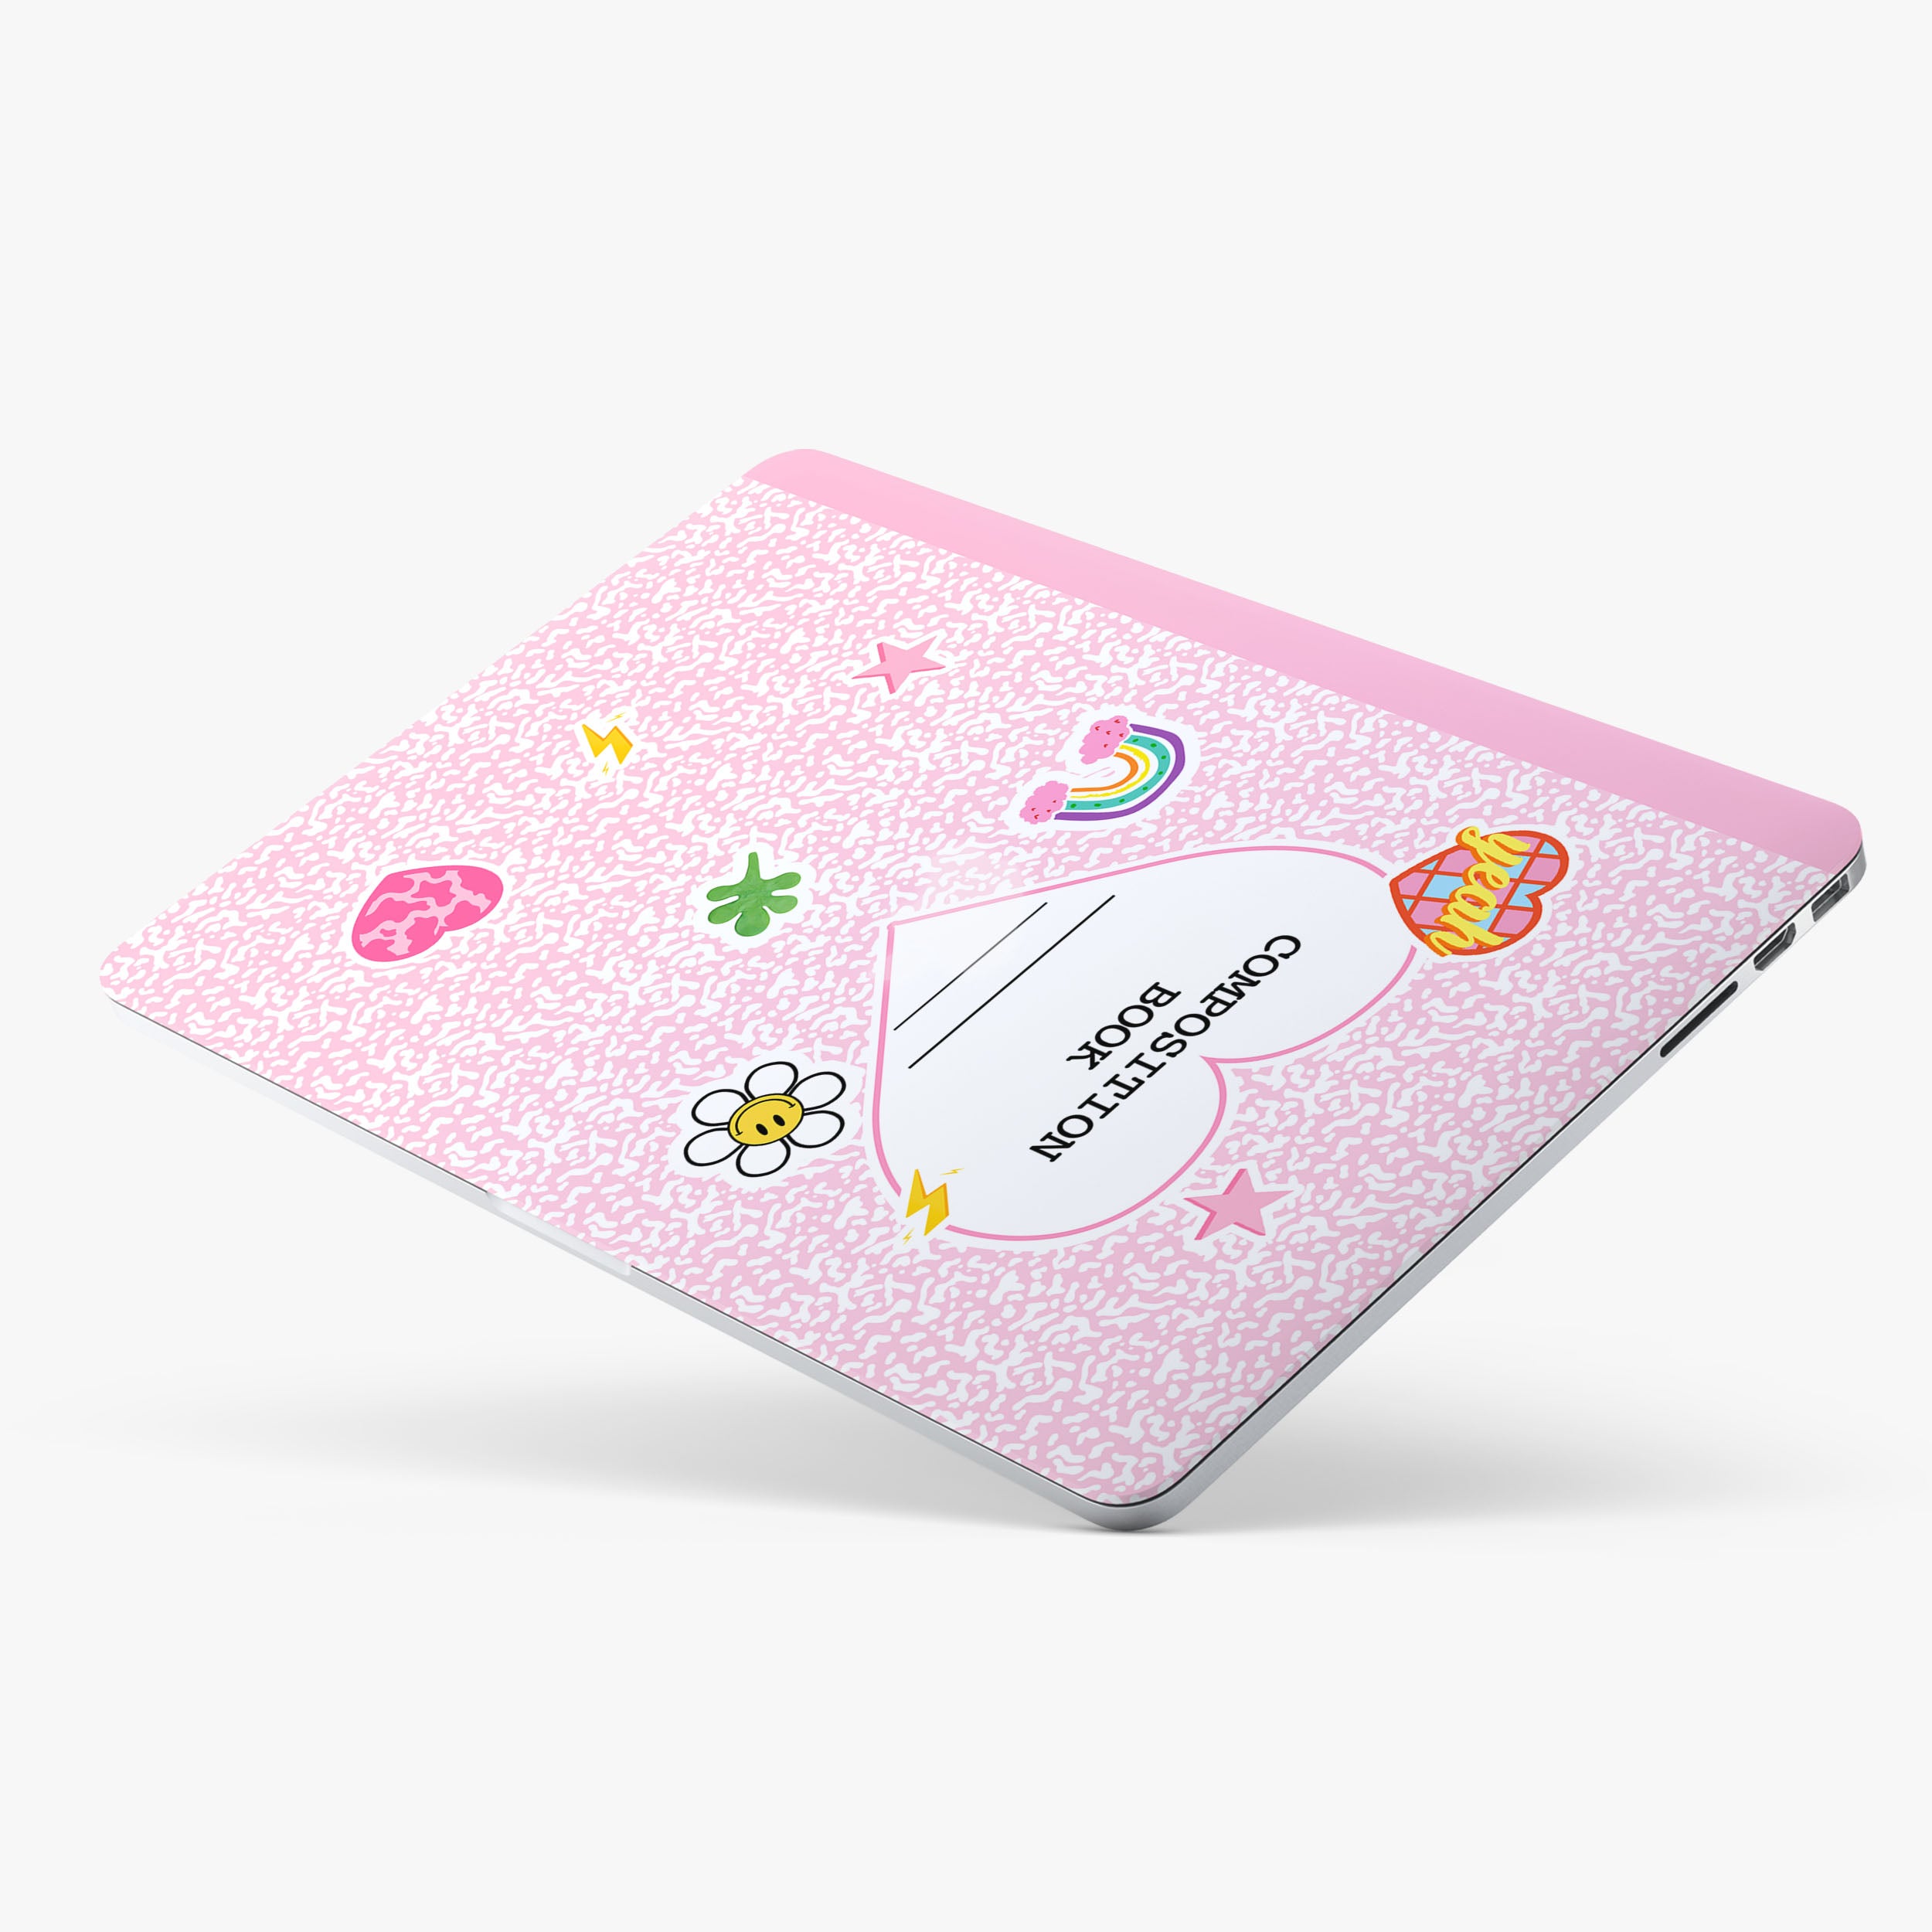 Cute Composition Notebook MacBook Case